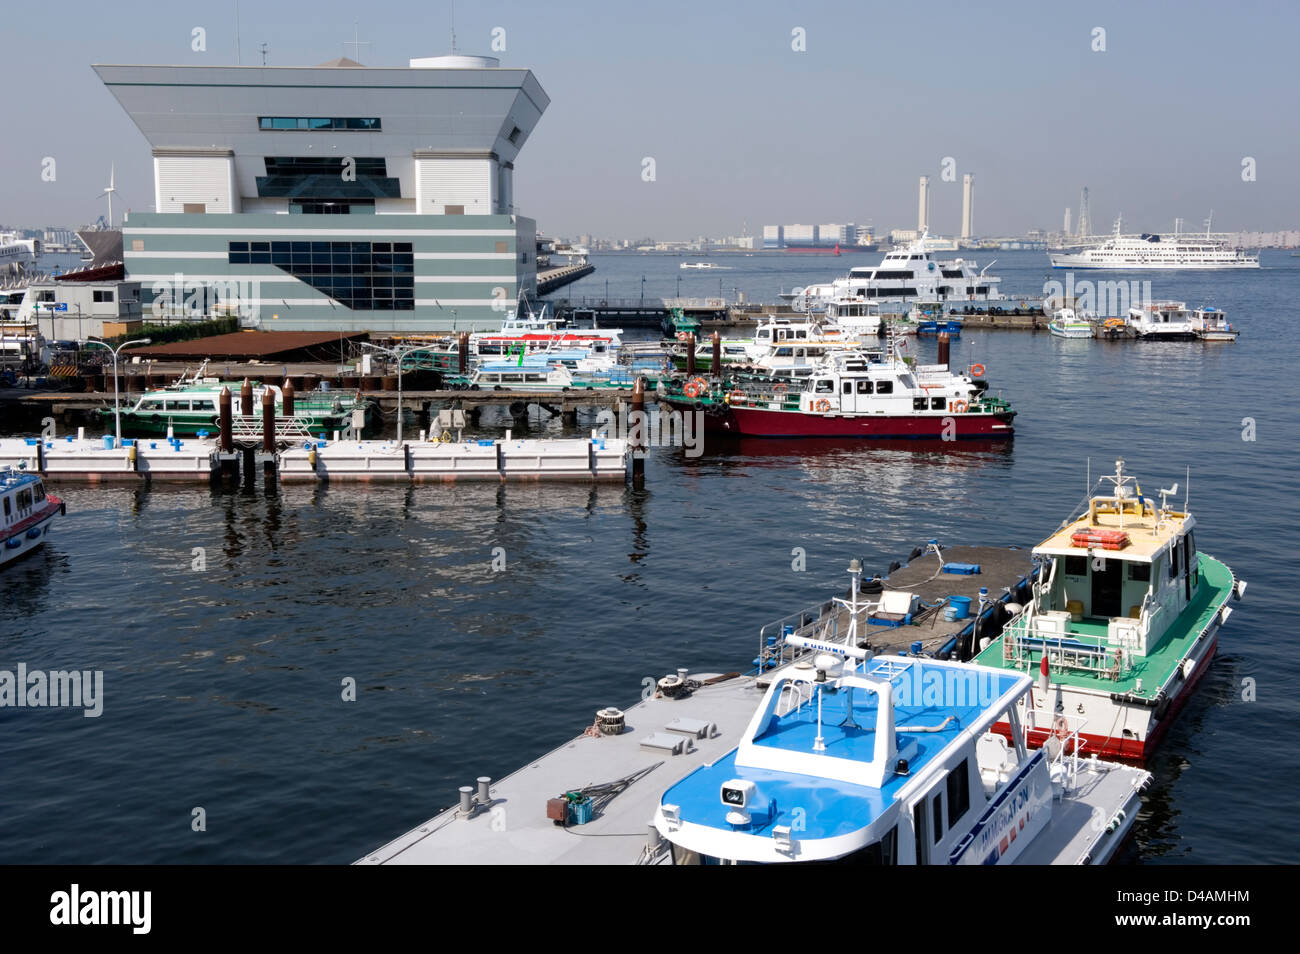 The modern International Passenger Terminal building on Osanbashi Pier dominates the busy waterfront of Yokohama, Japan. Stock Photo